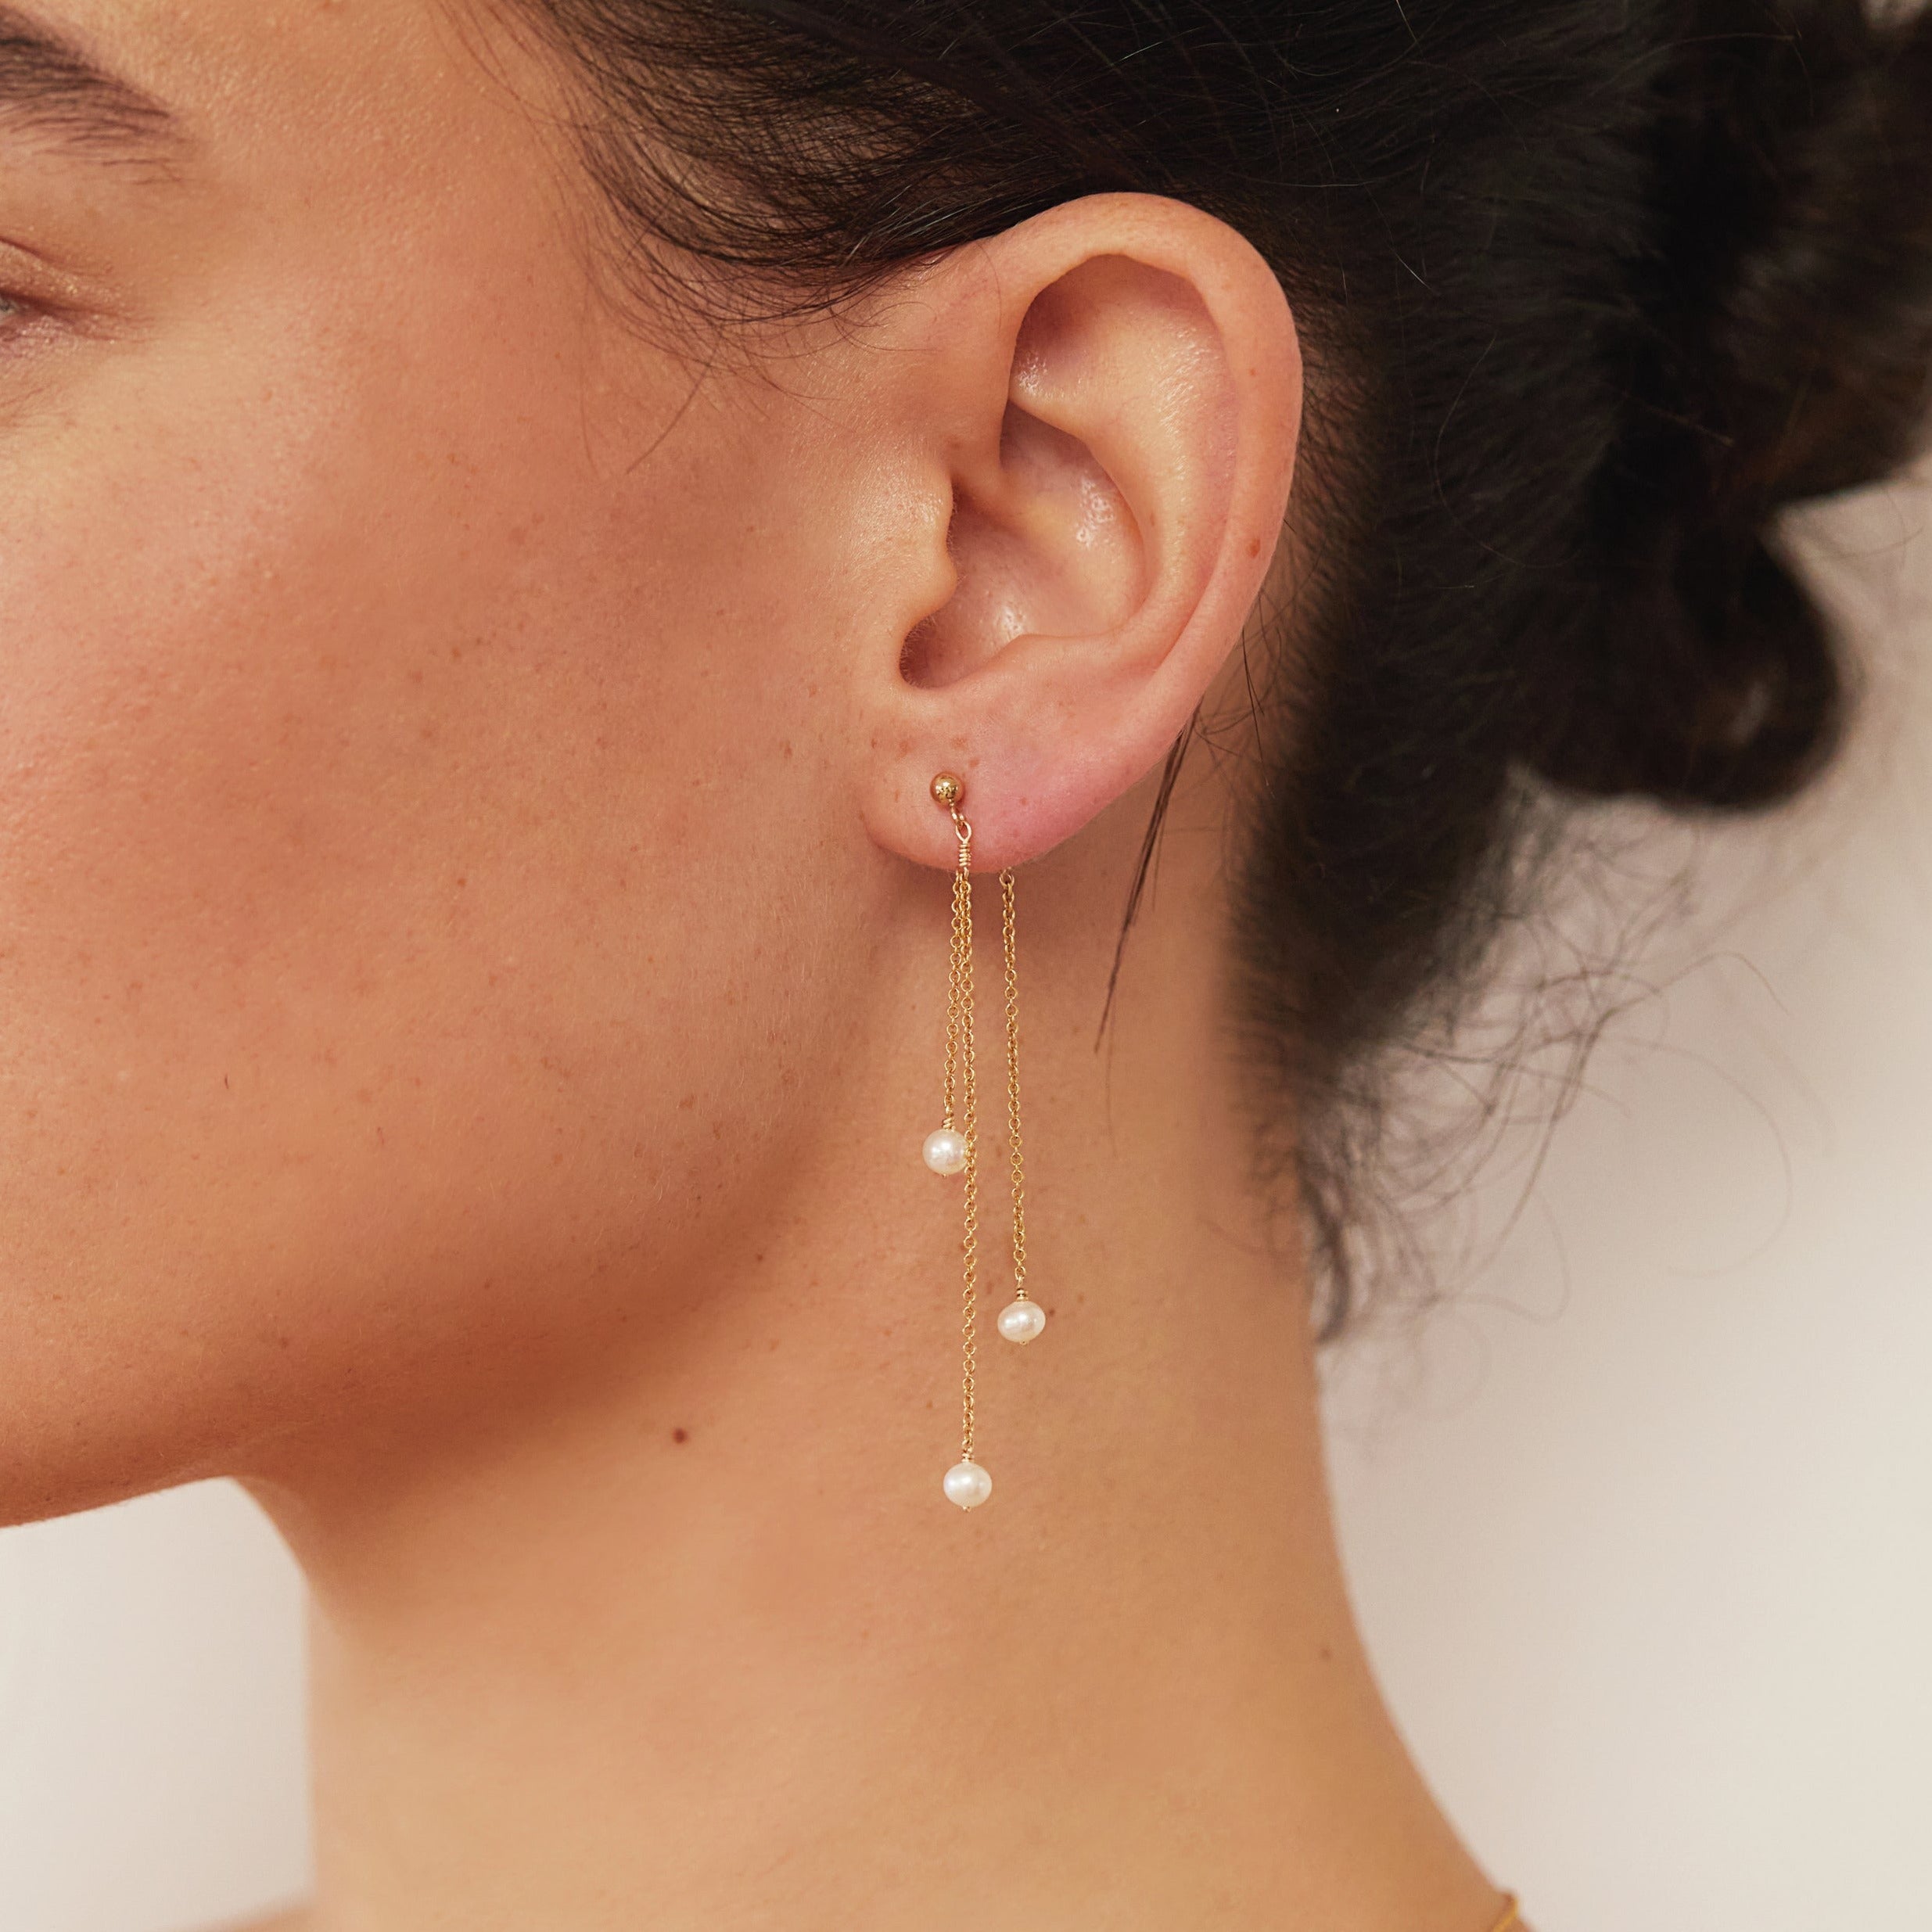 Gold layered pearl drop earring in one ear lobe